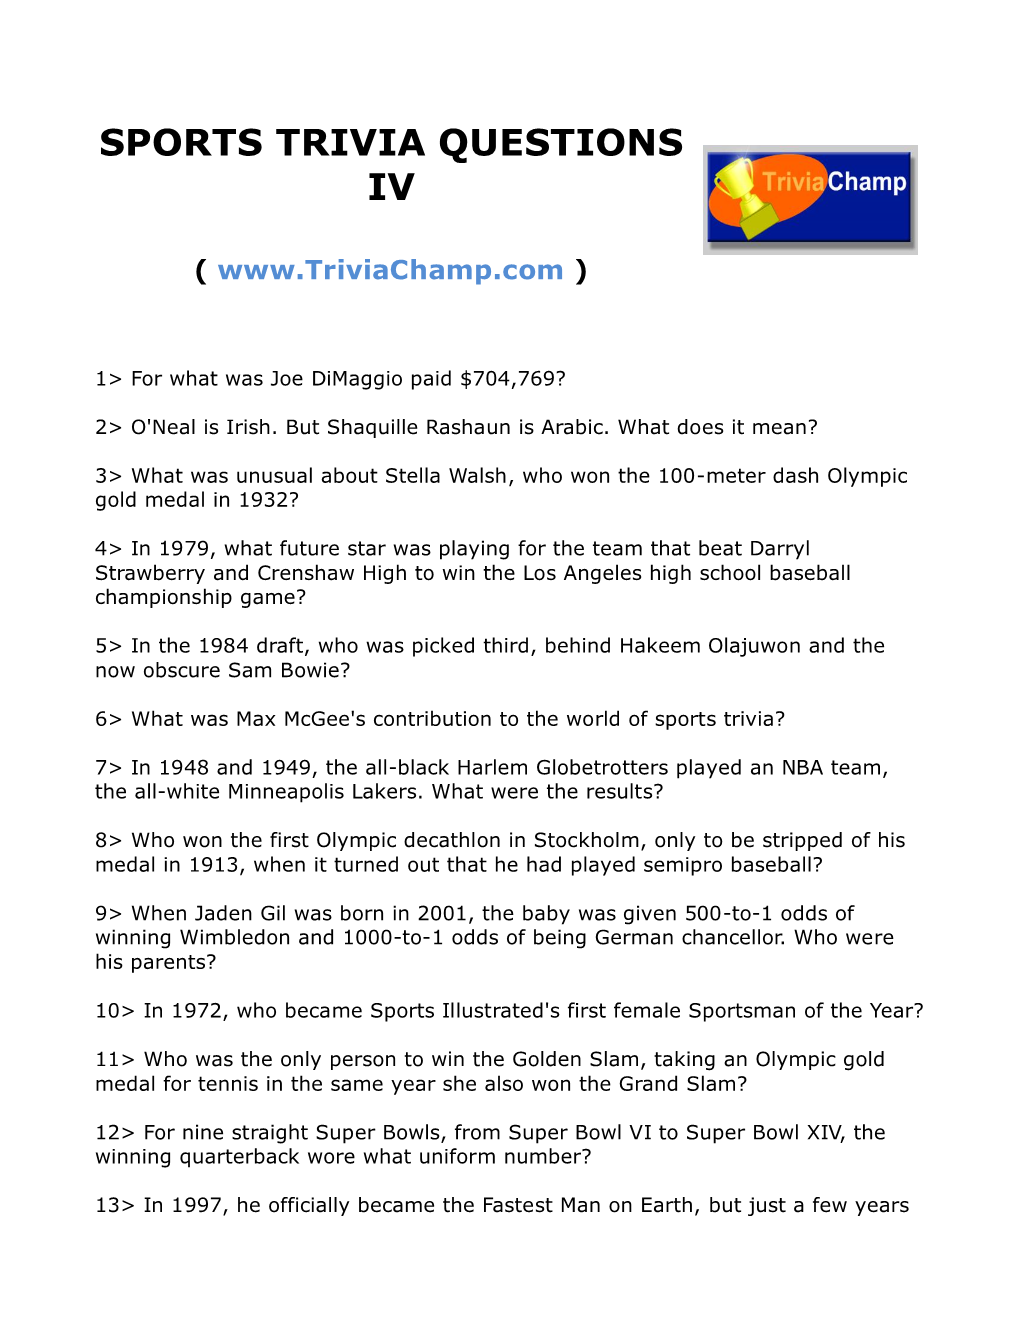 Sports Trivia Questions Iv